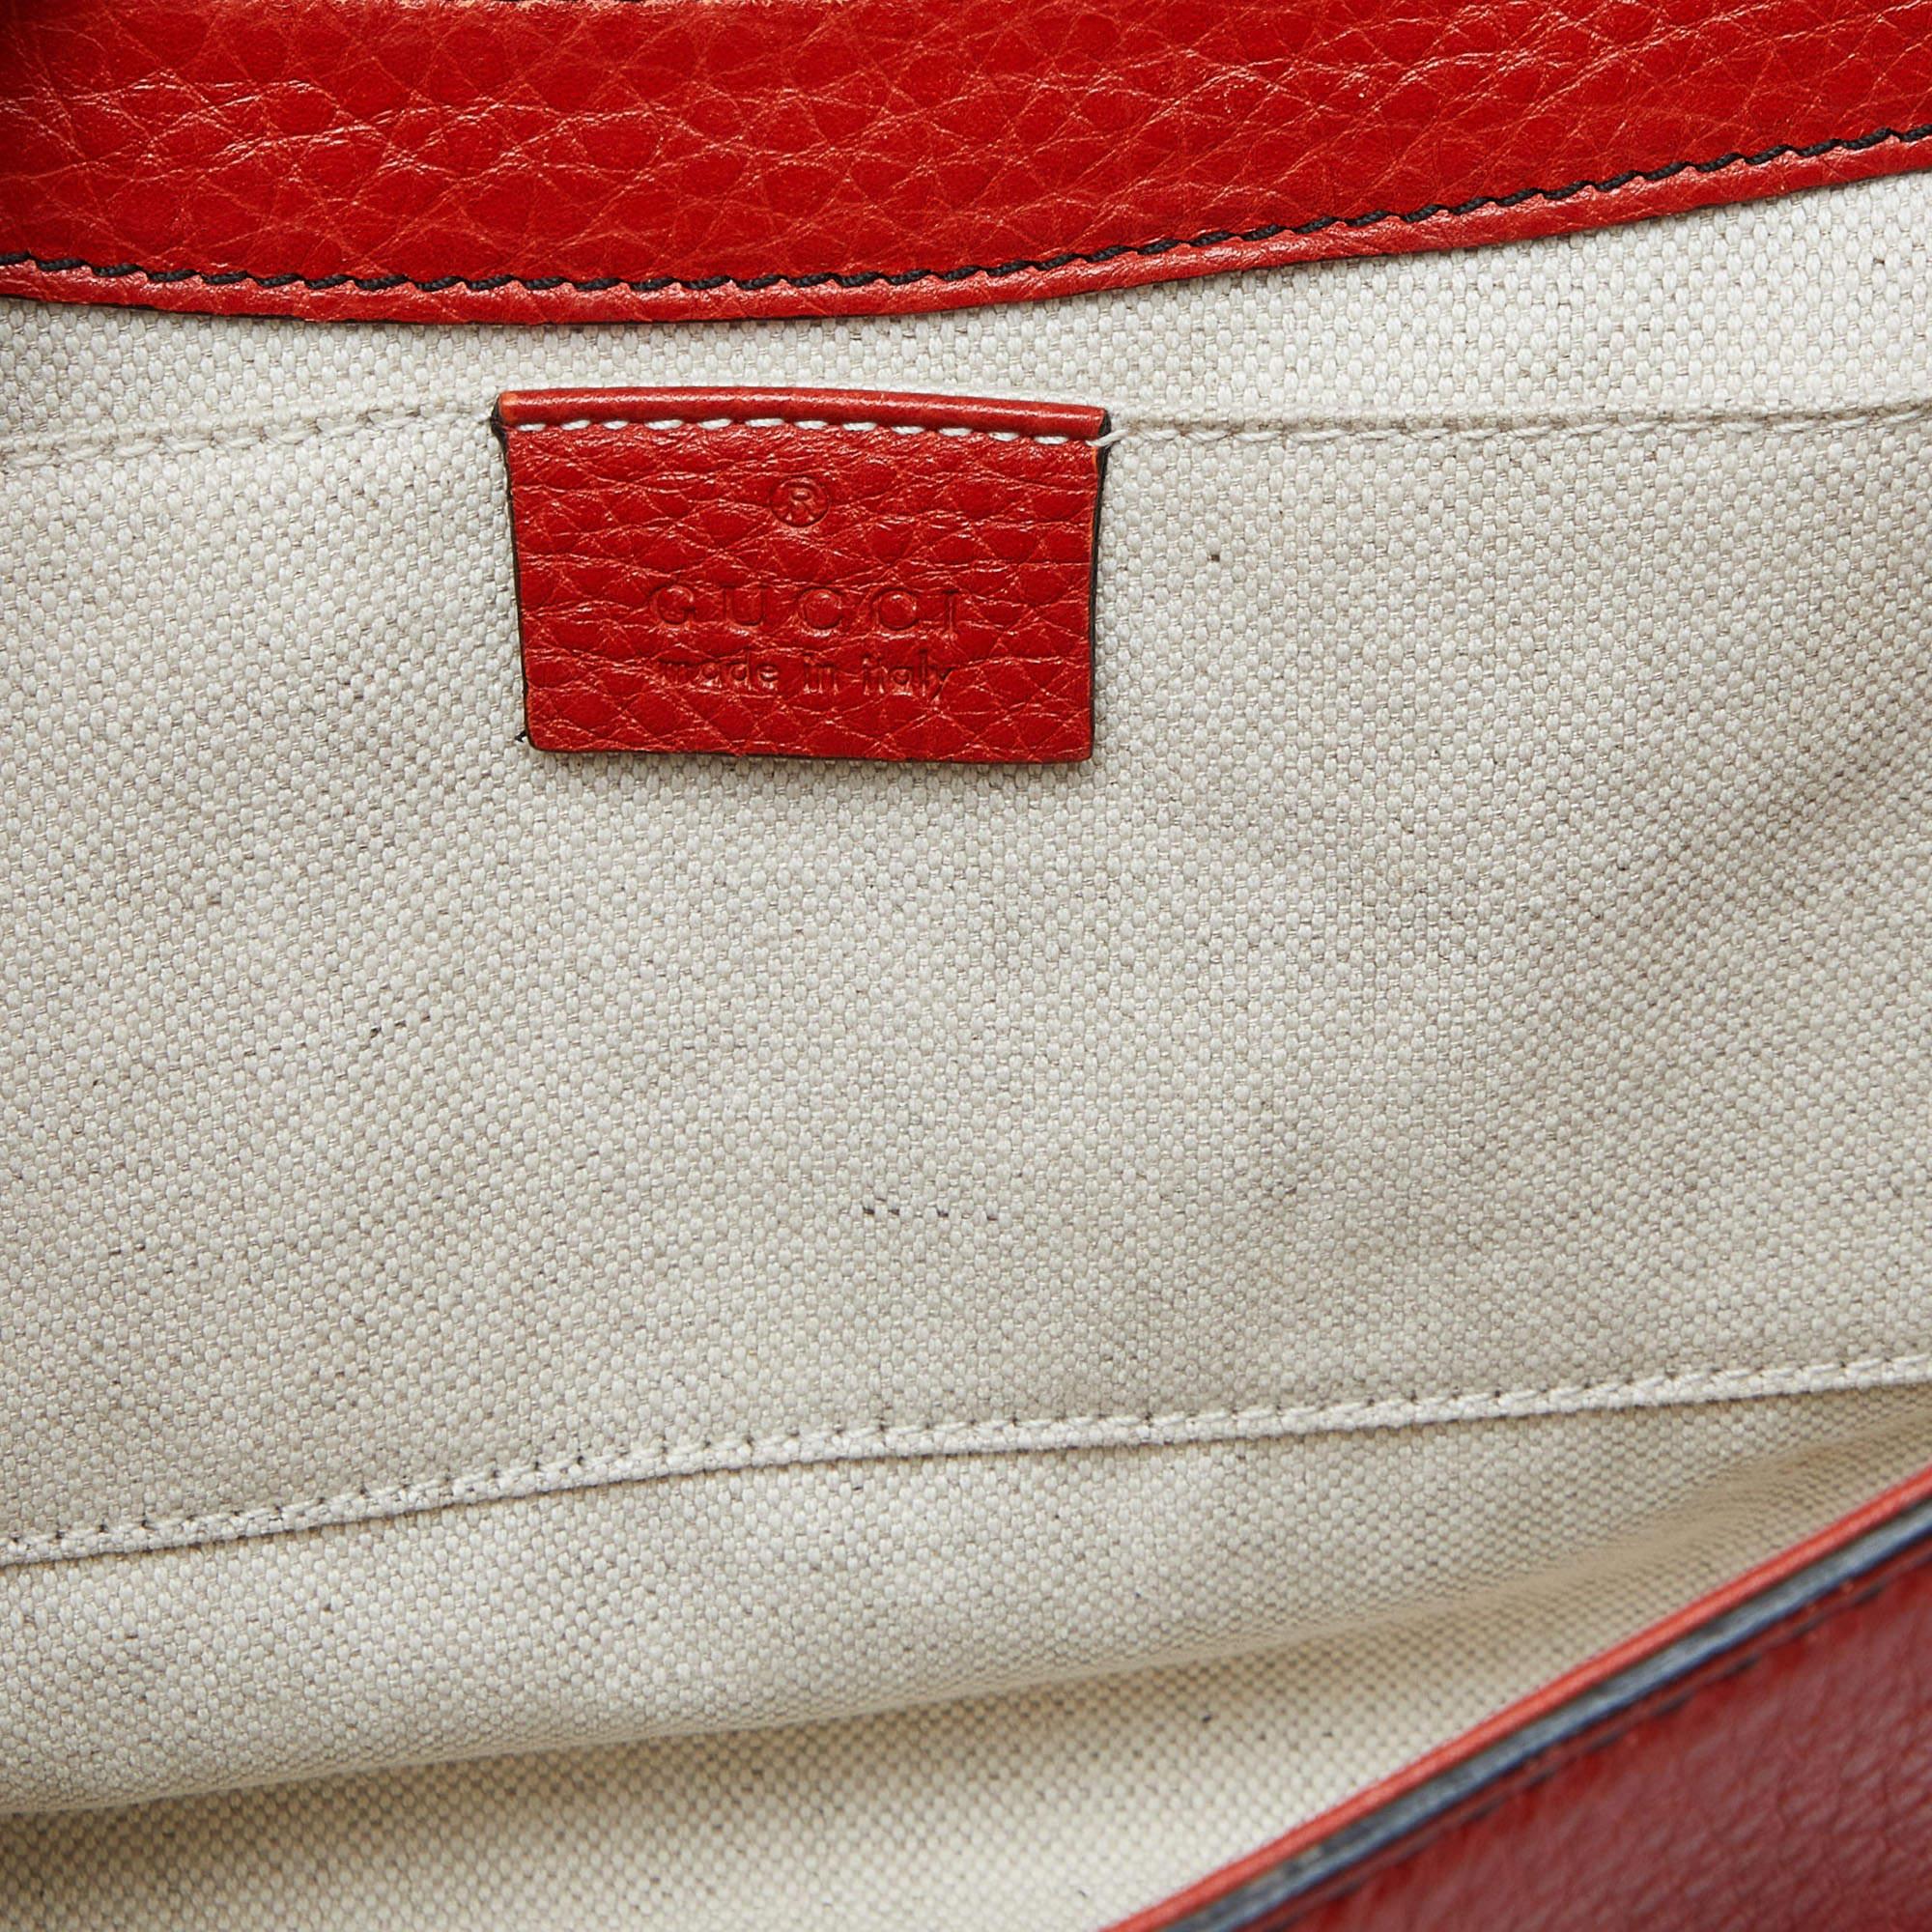 Gucci Coral Red Leather Medium Emily Shoulder Bag 3